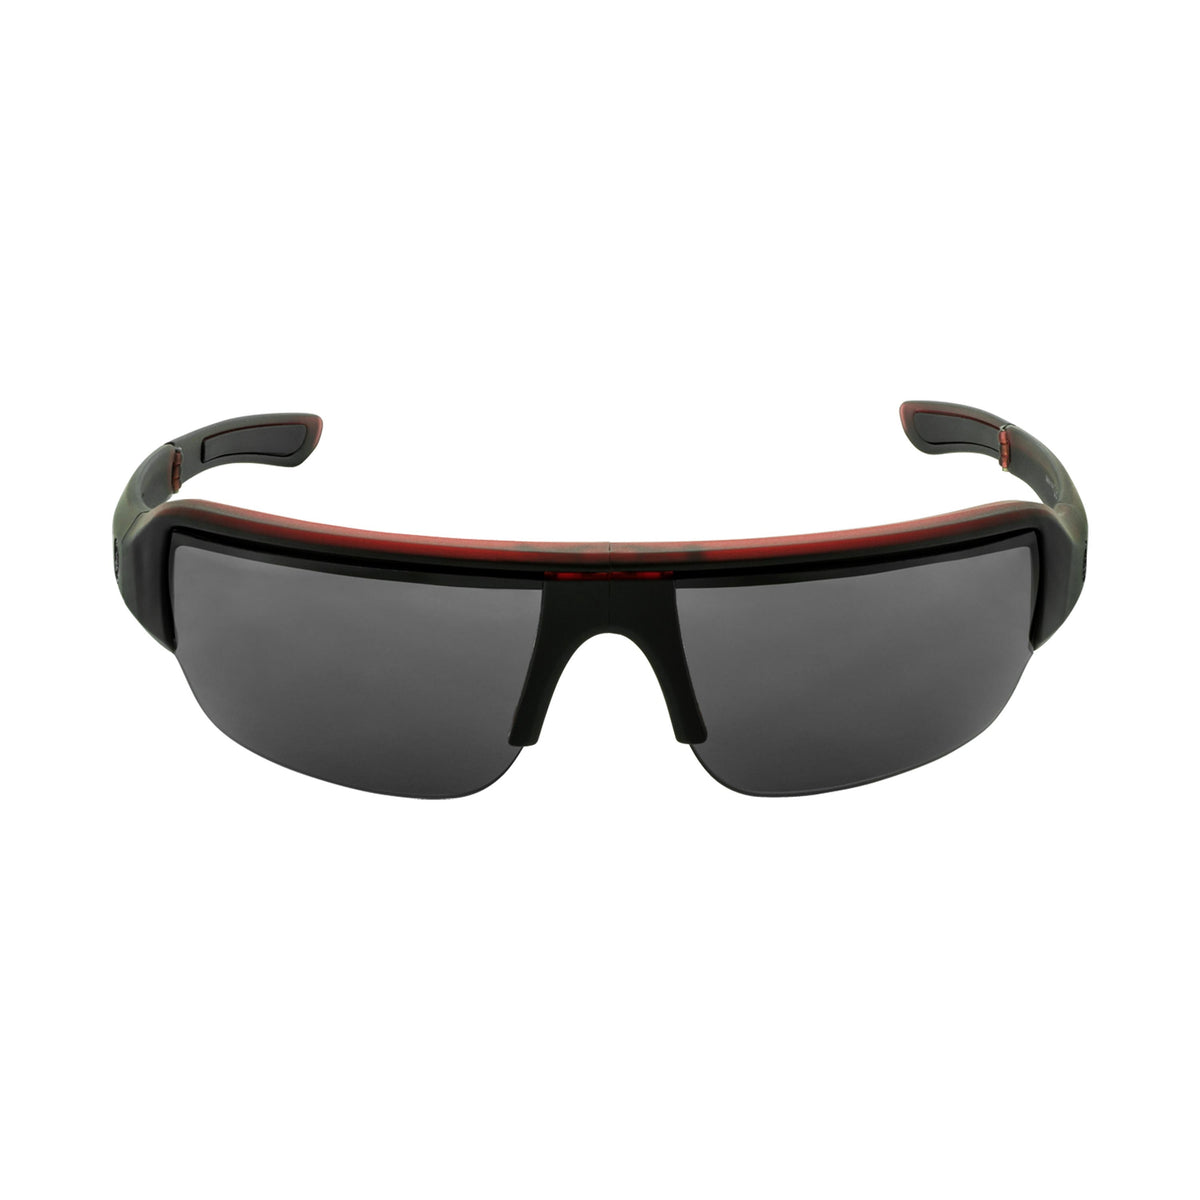 Popticals, Premium Compact Sunglasses, PopGun, 030010-REGP, Polarized Sunglasses, Matte Red/Black Crystal Frame, Gray Lenses, Front View